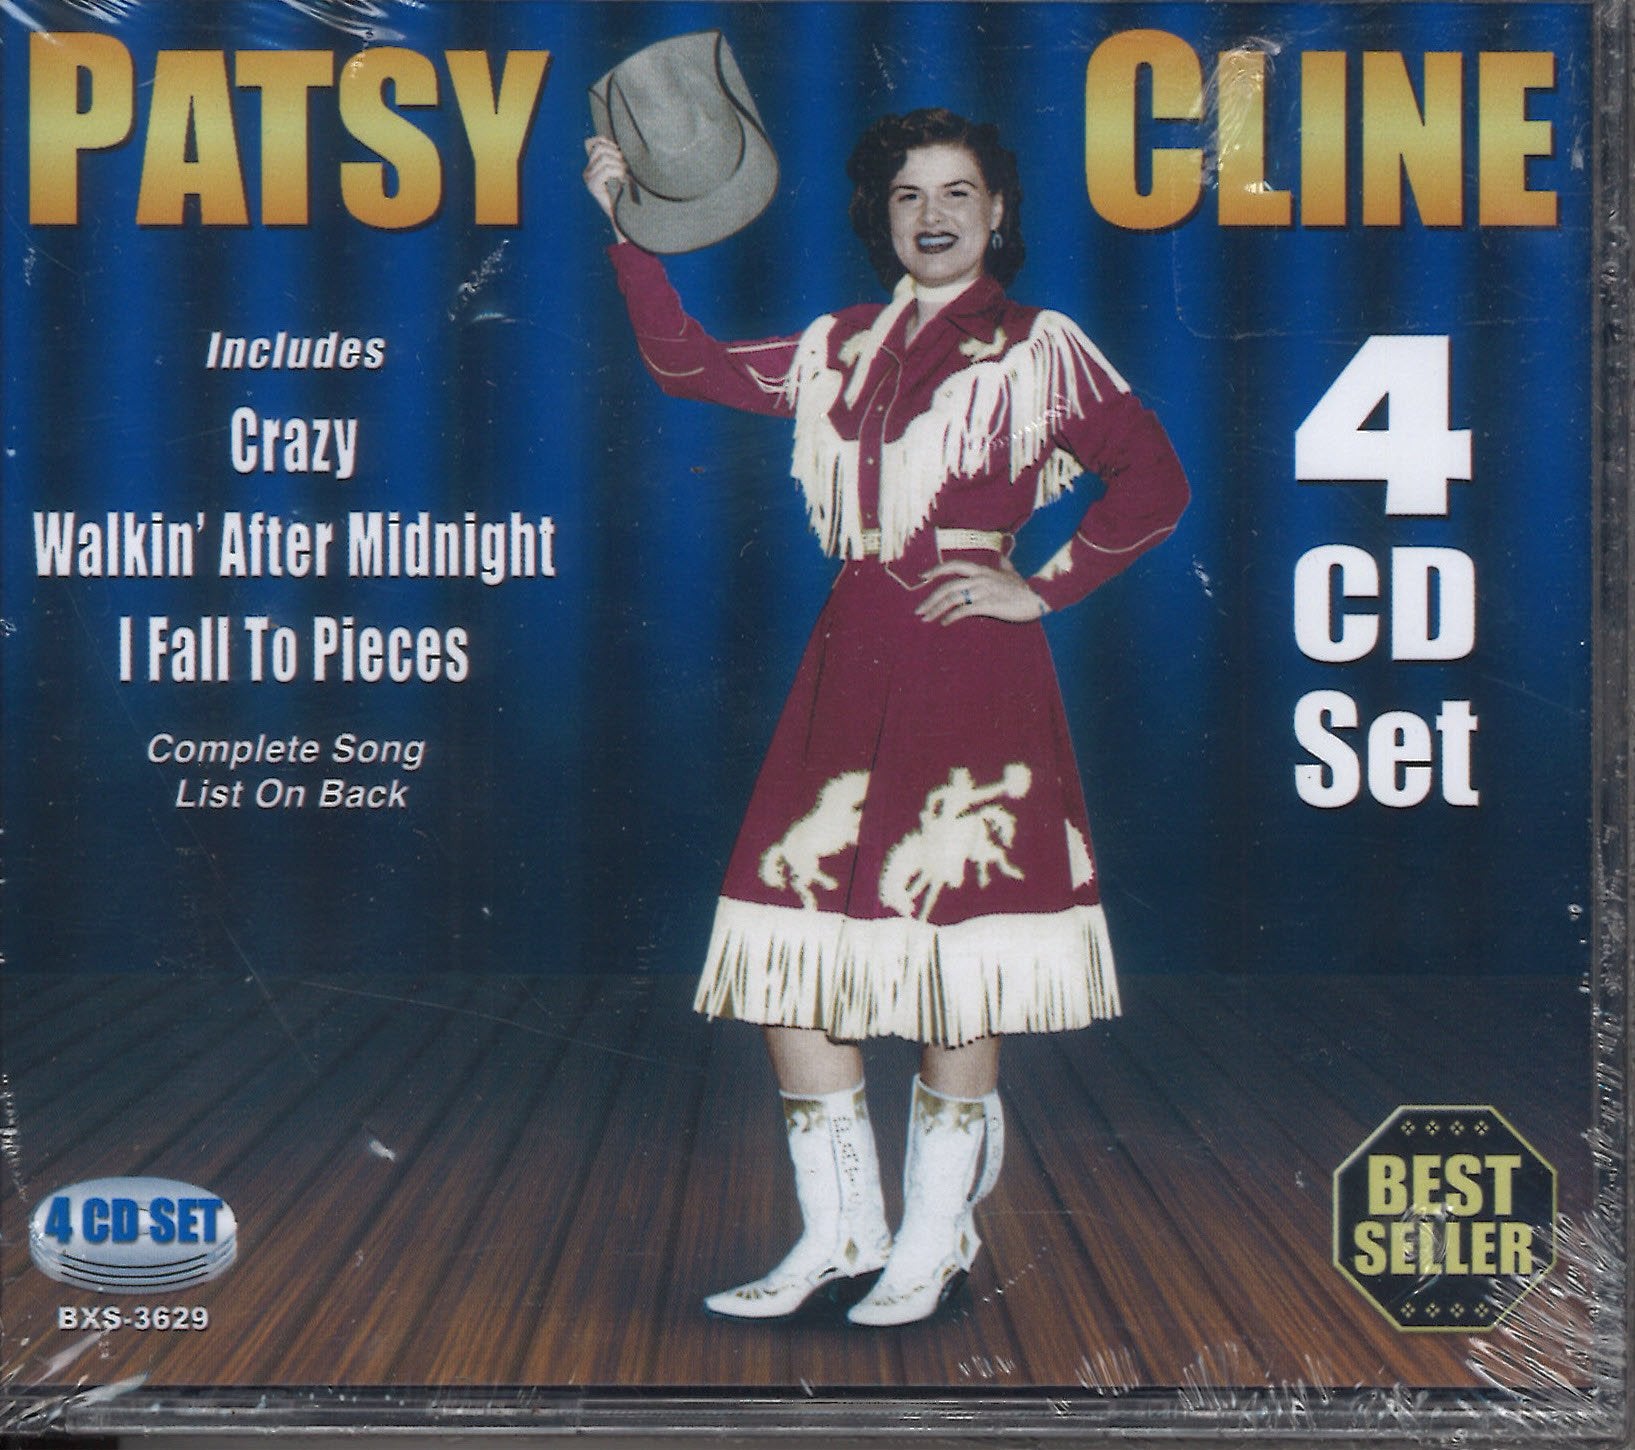 Patsy Cline: 4 CD Set